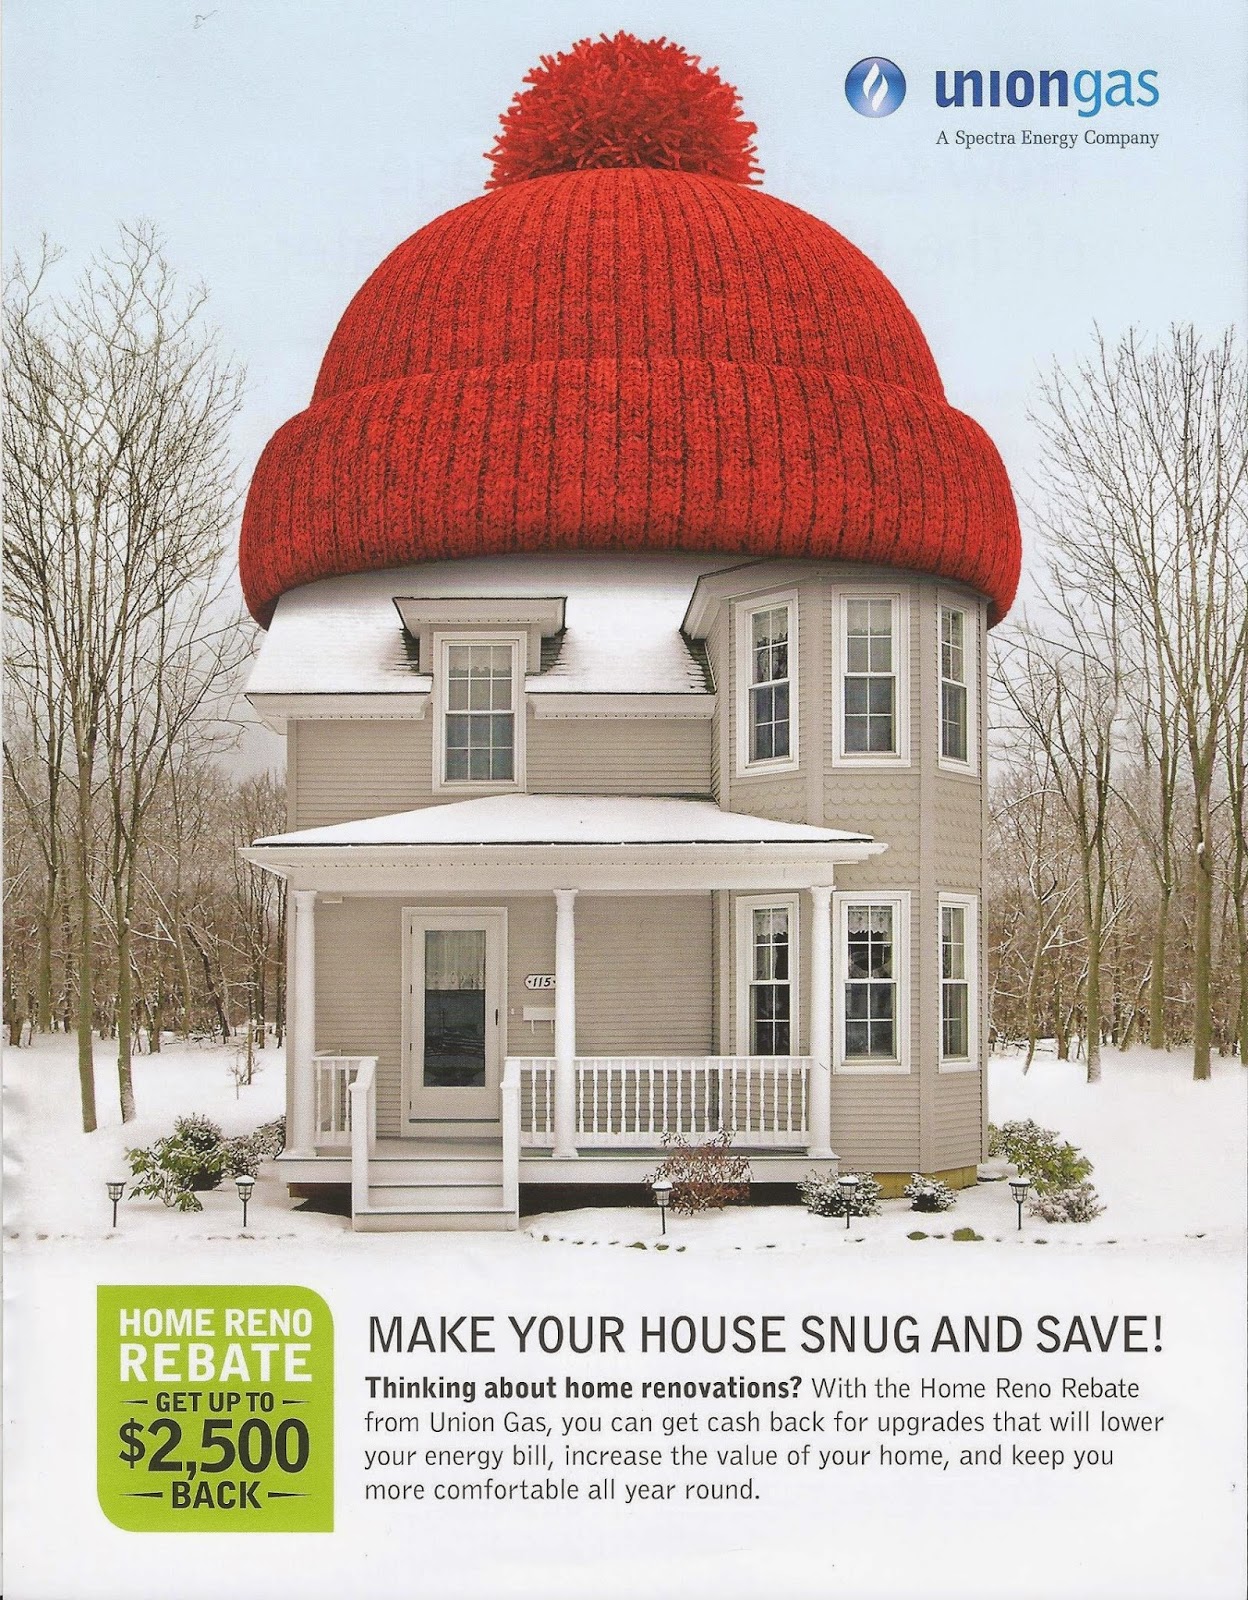 winter-wonderland-home-renovations-rebate-from-union-gas